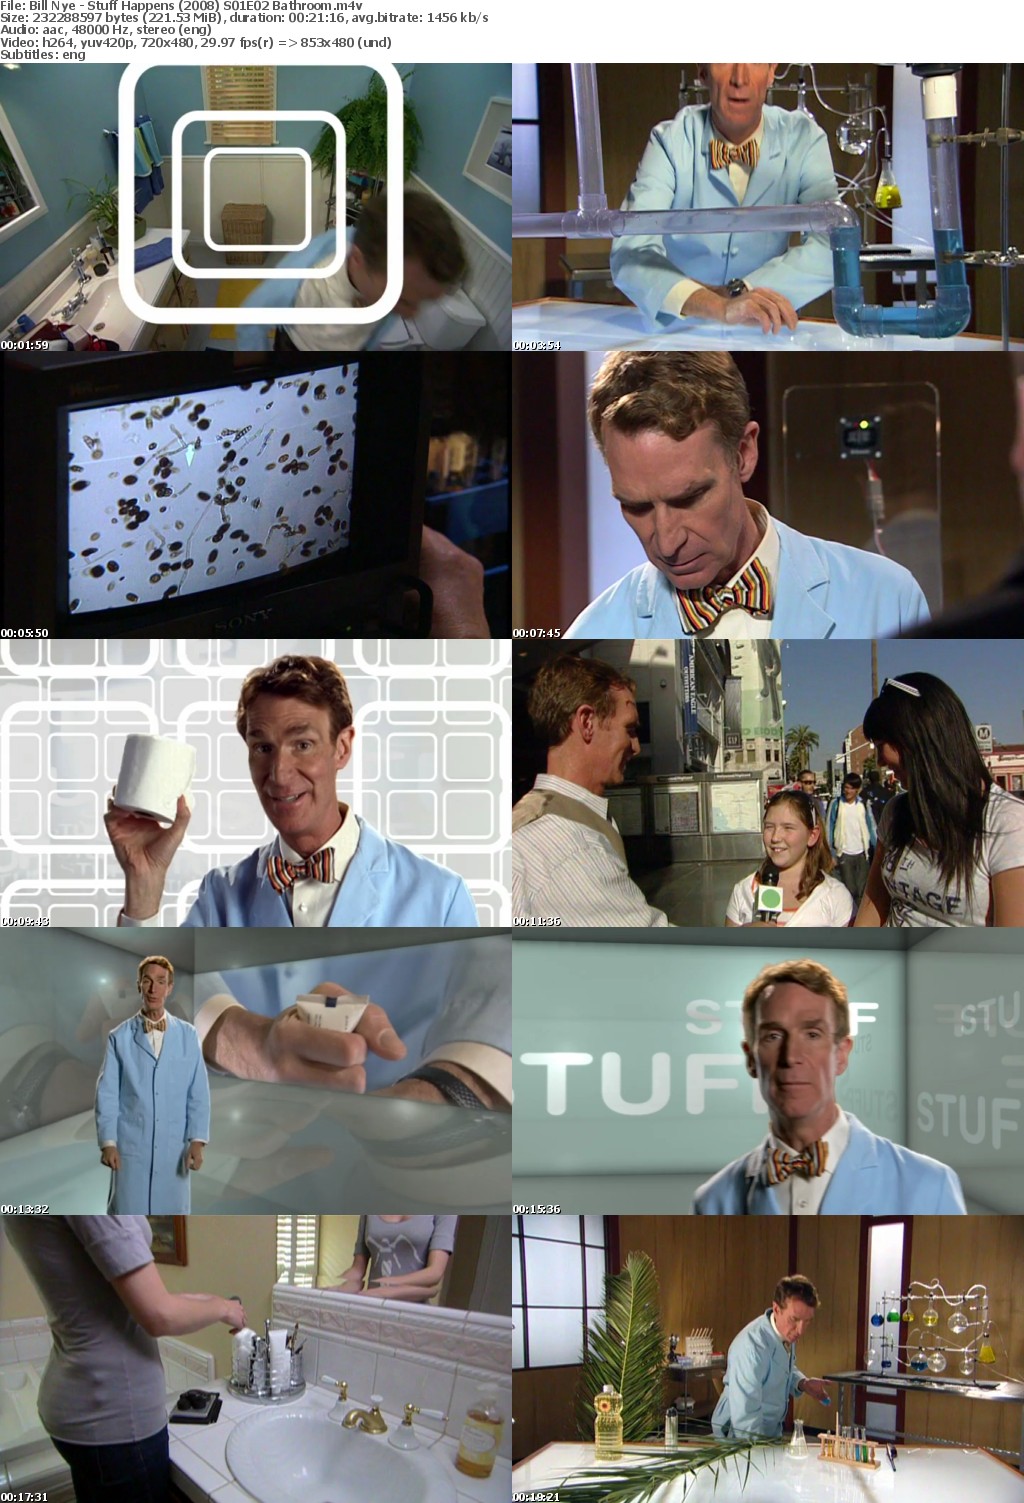 Stuff happens with Bill Nye (2008) DVDrip